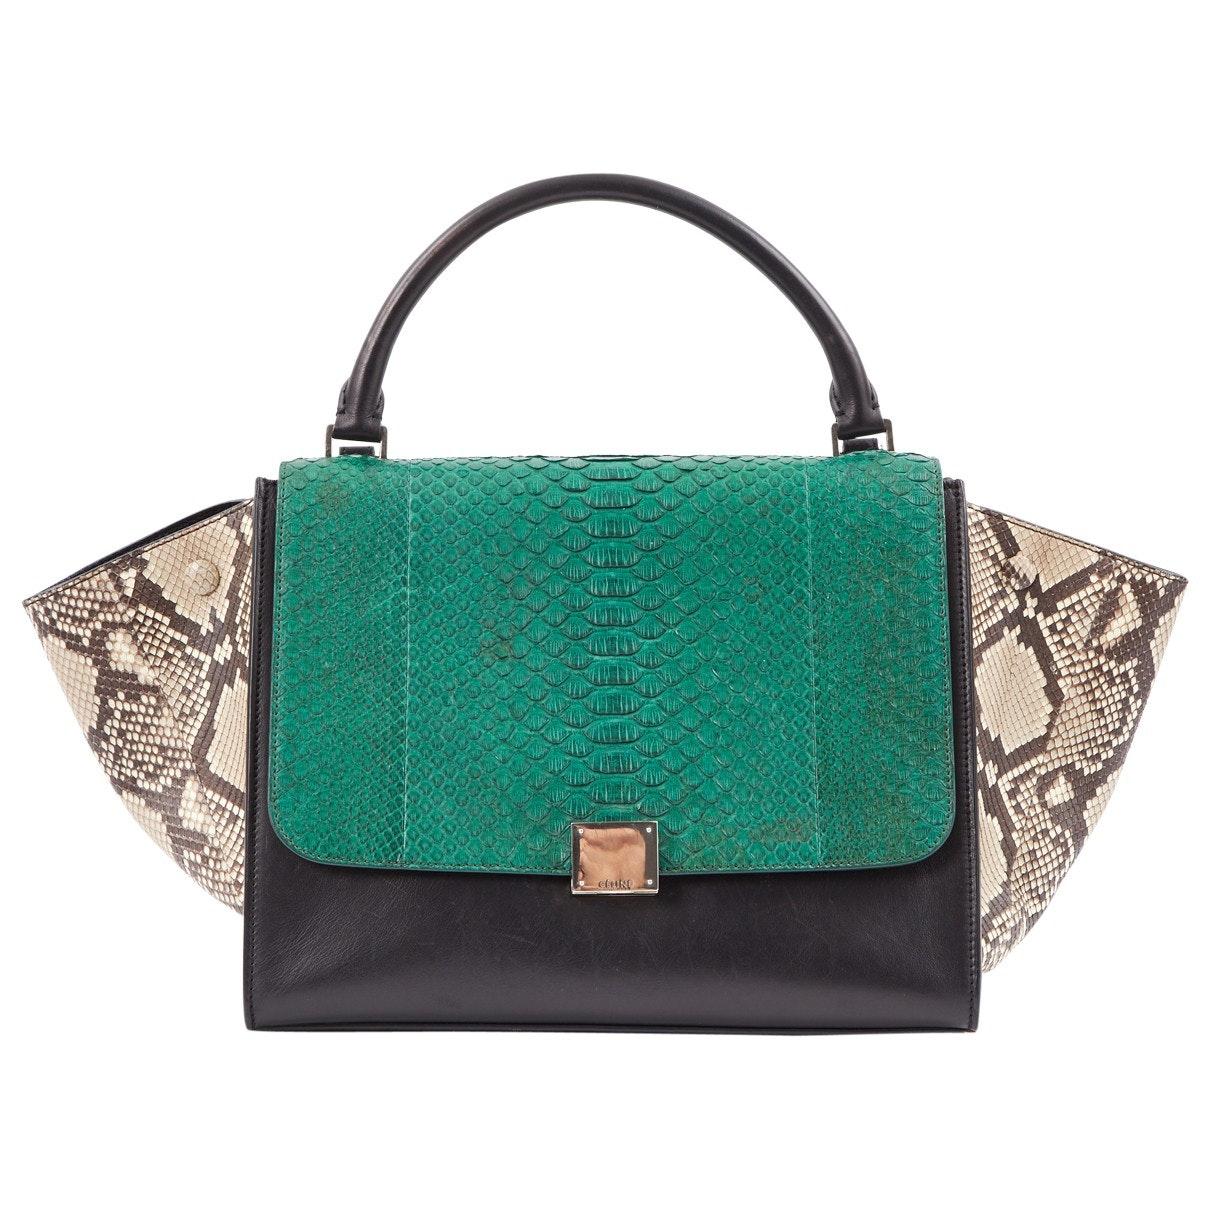 Céline Leather Trapèze Multicolour Python Handbag in Green - Lyst